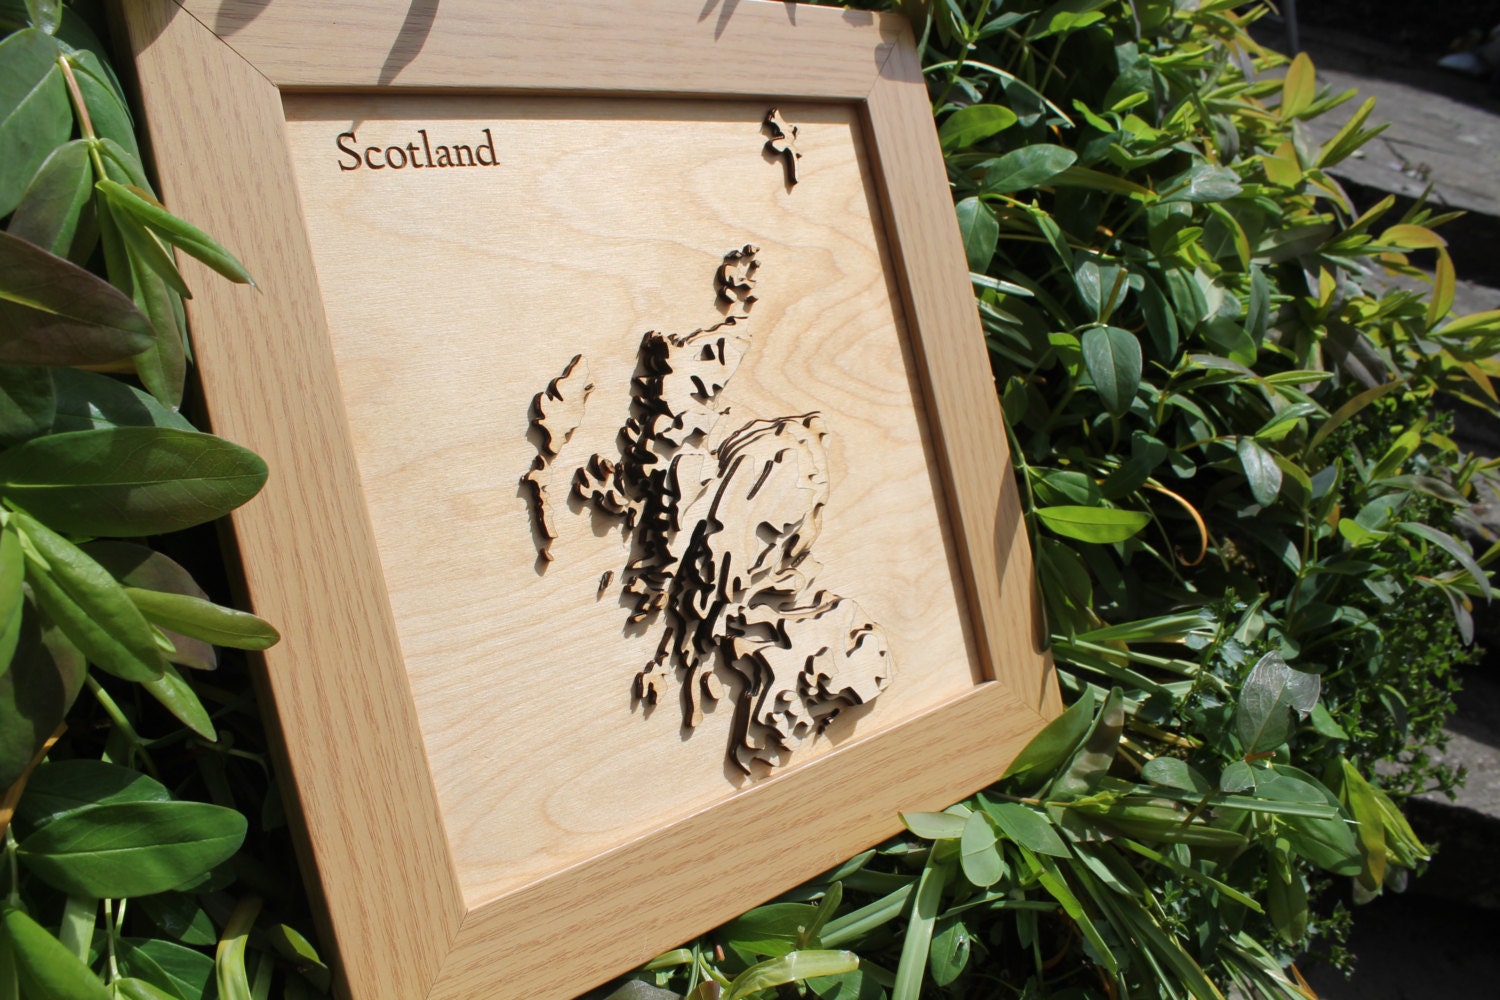 3D Scotland Map - Wooden Topographical Map - Scotland Map - Wooden Contour Map